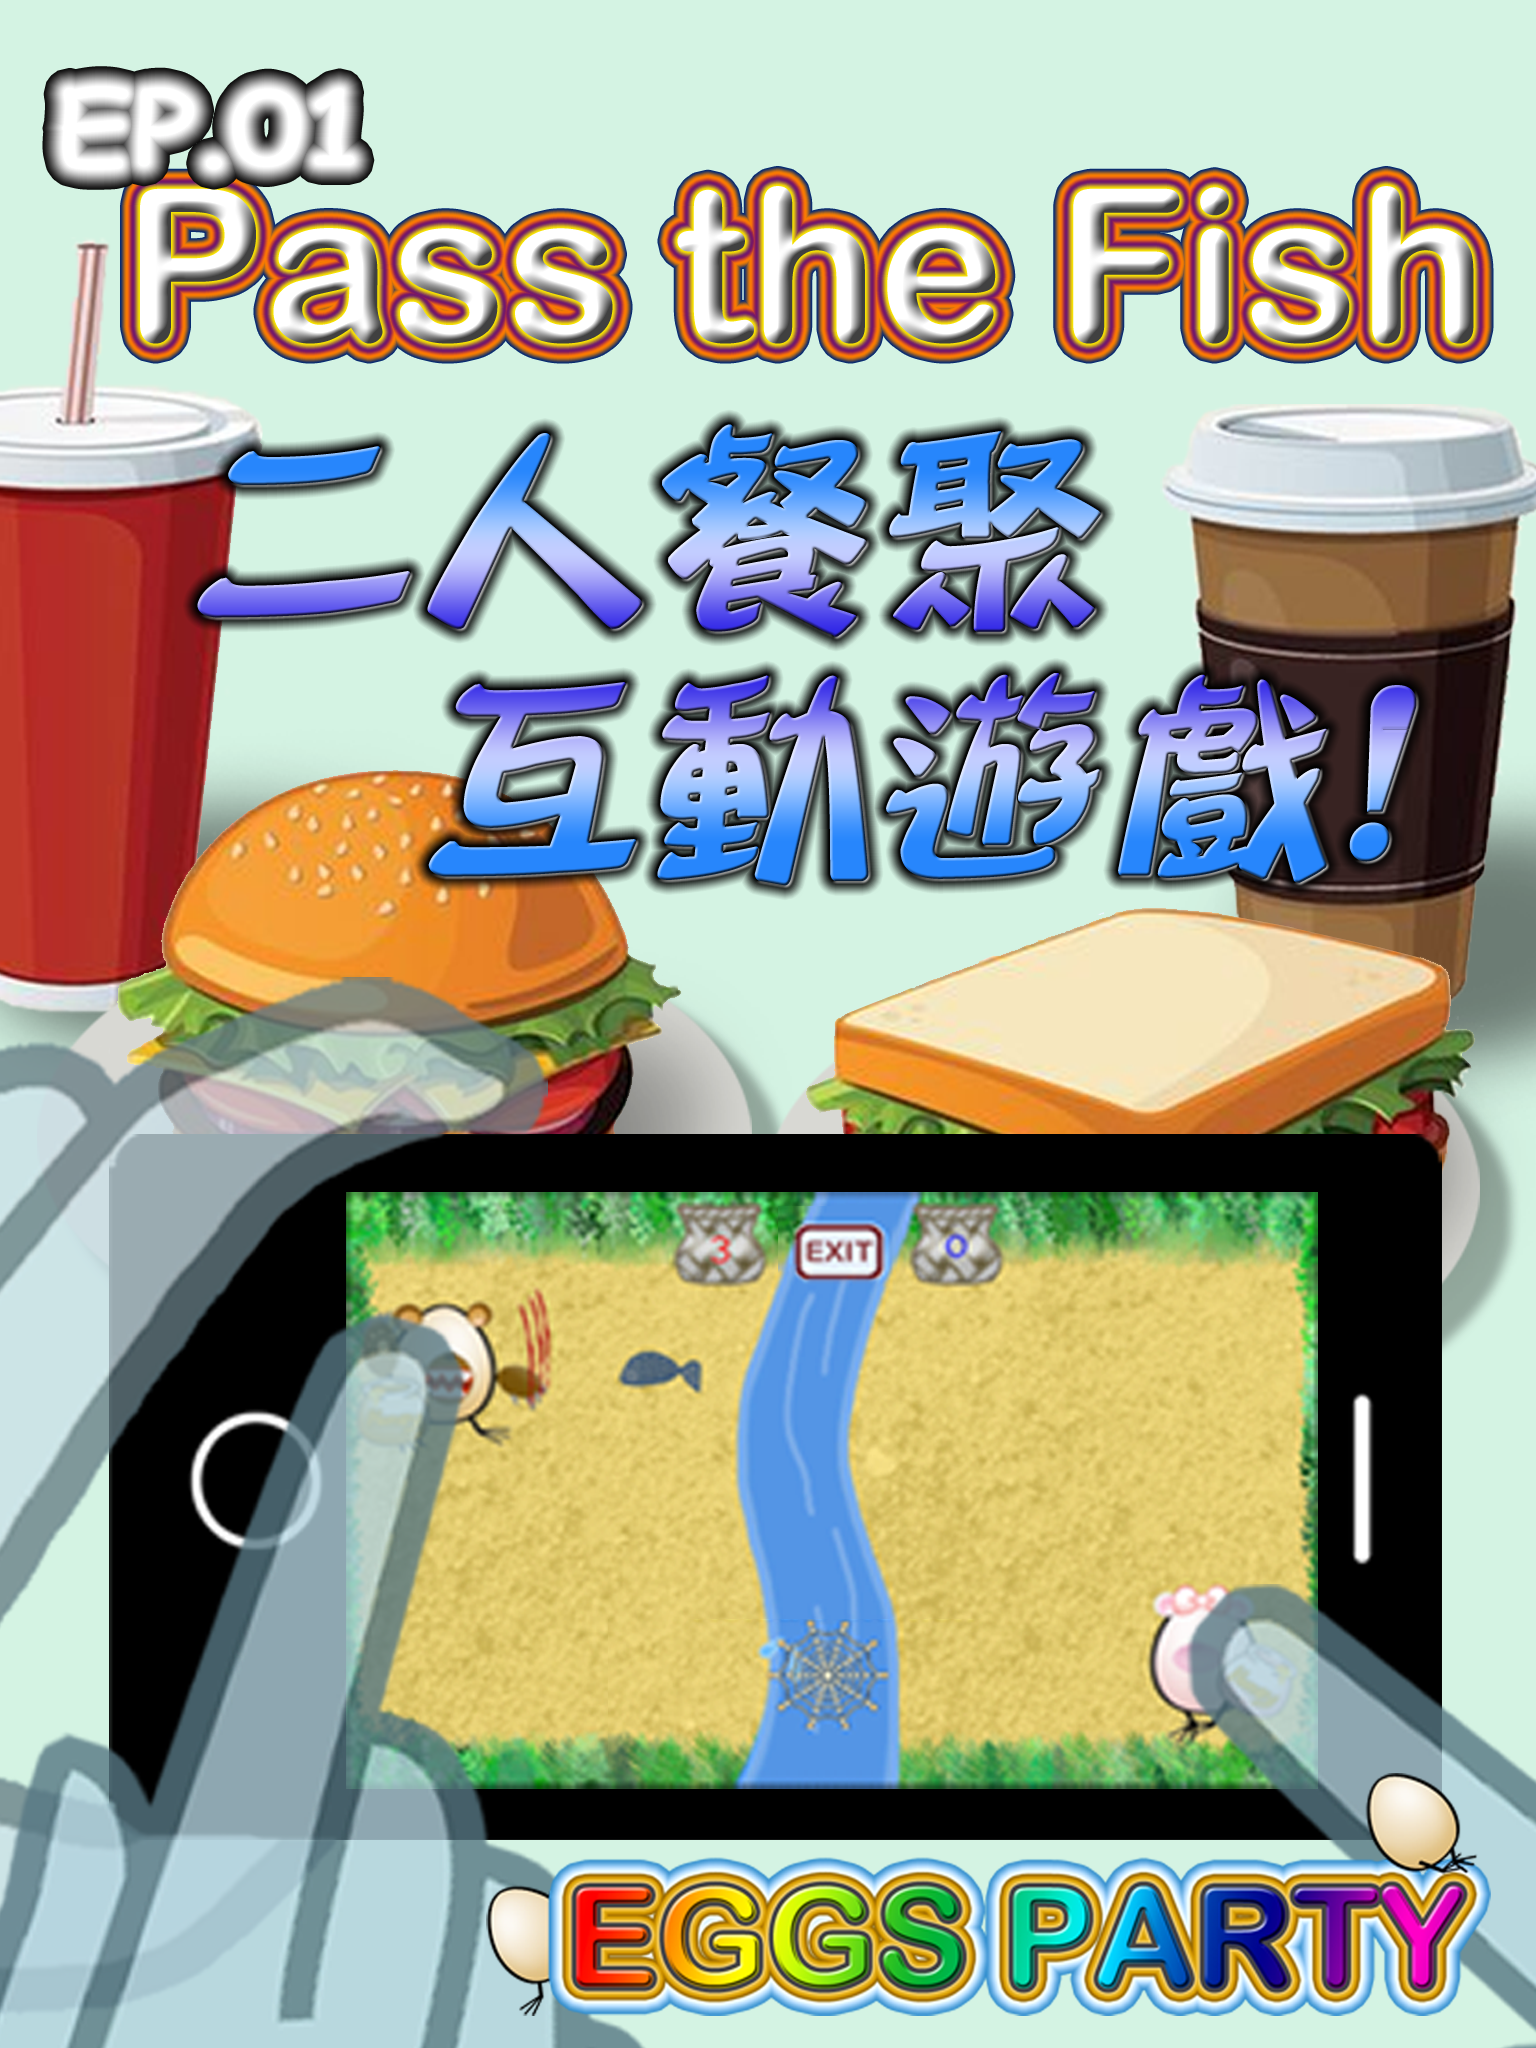 Screenshot 1 of Eggs Party ep1: Passe o peixe 2.1